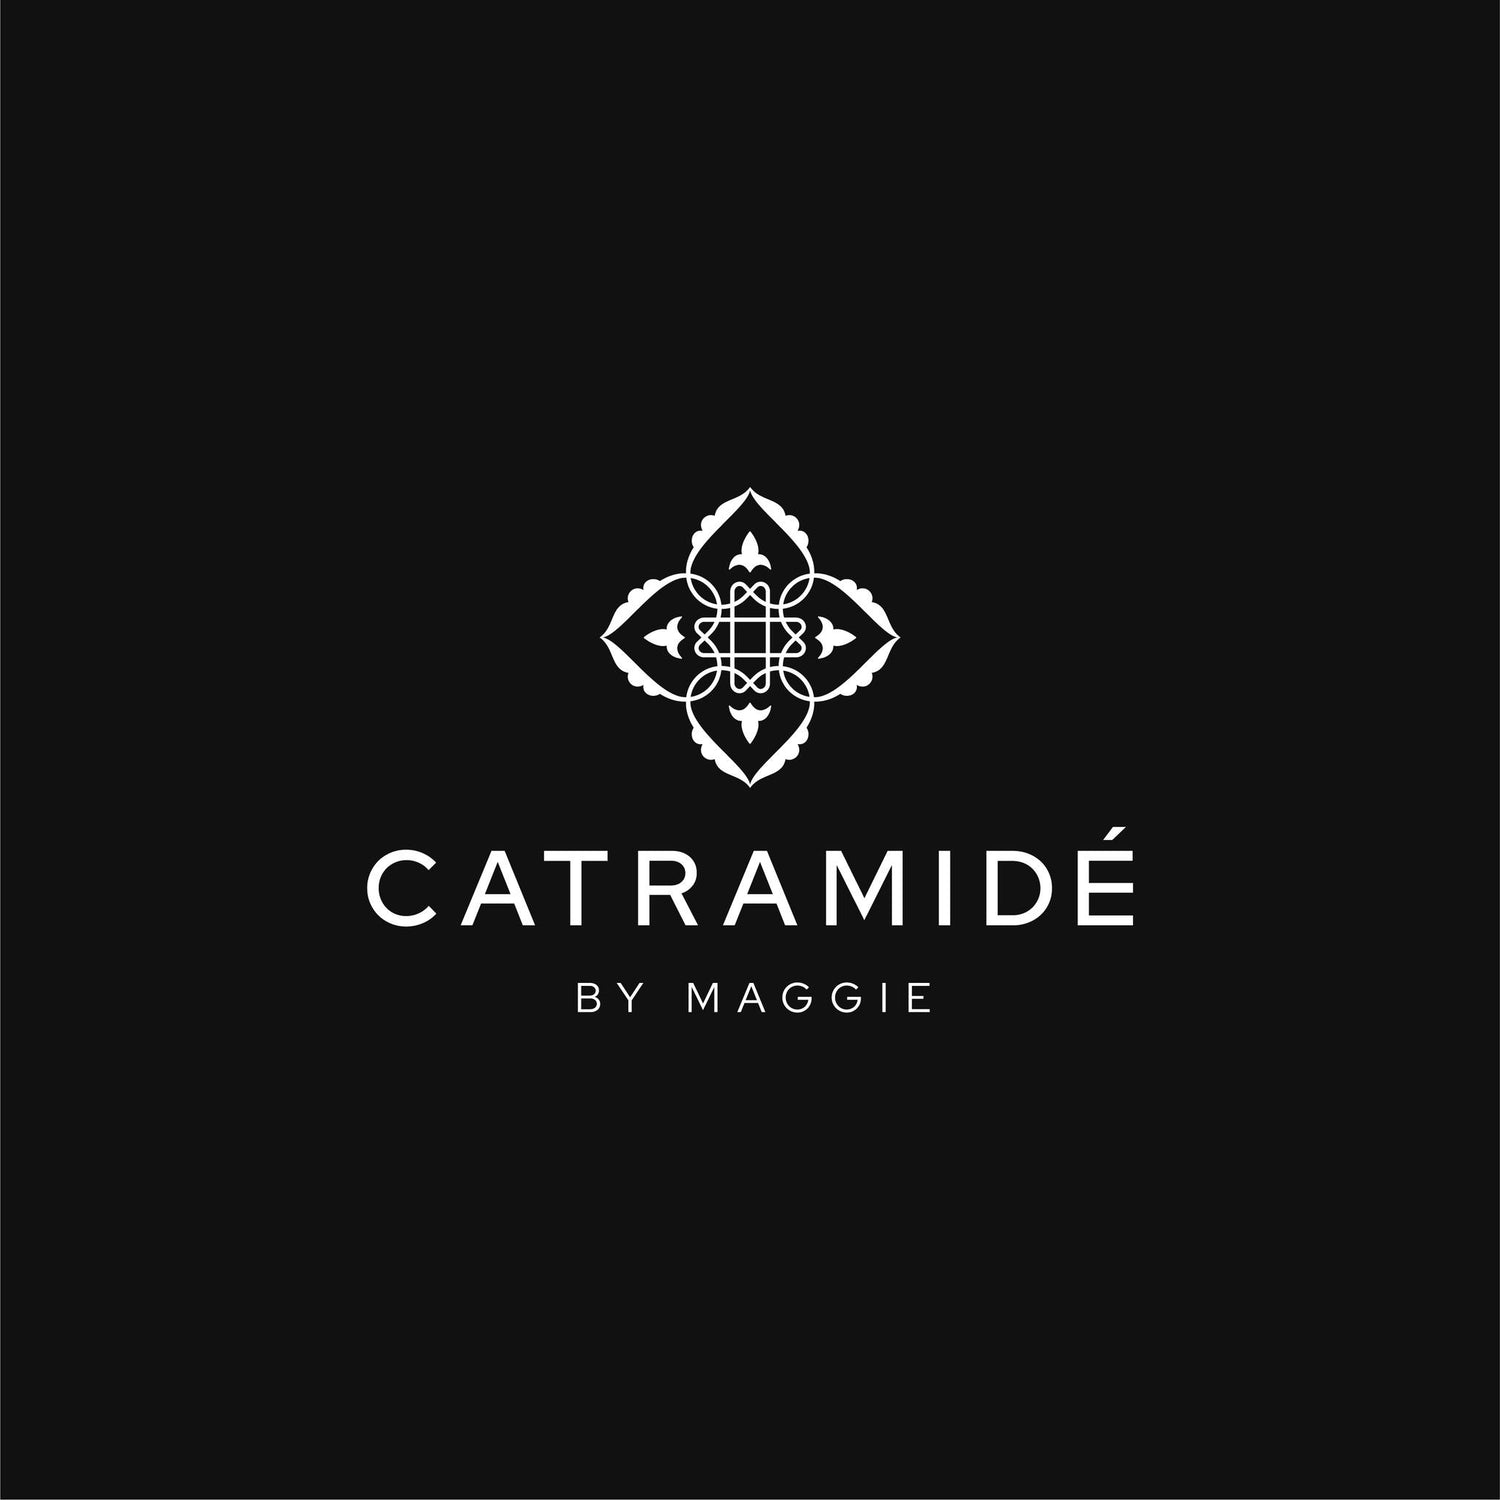 Catramide